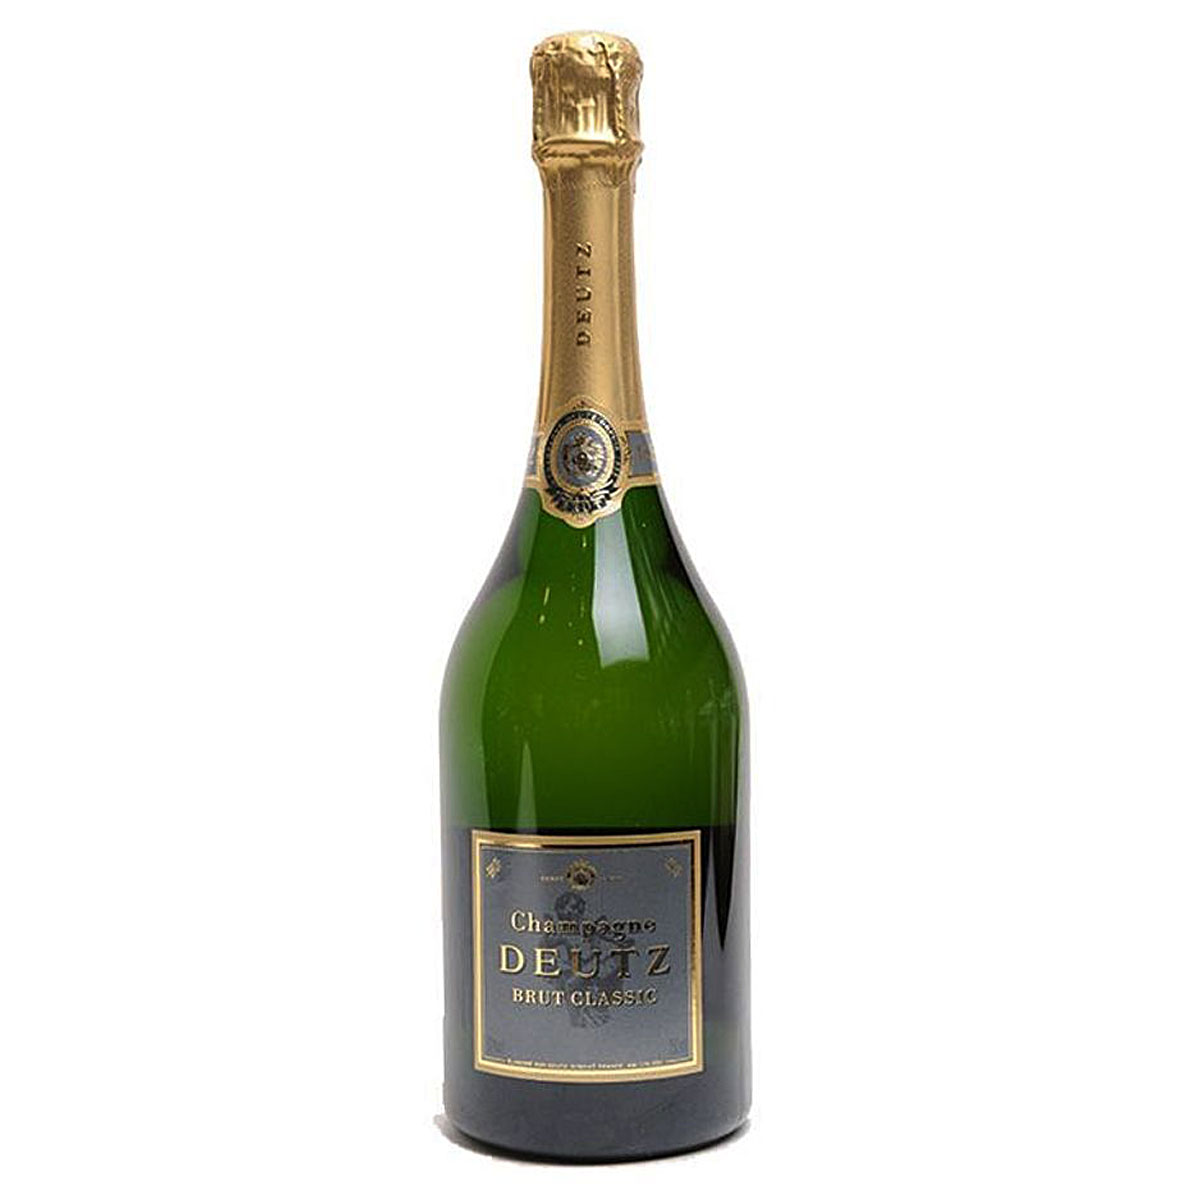 bottle of champagne deutz brut classic